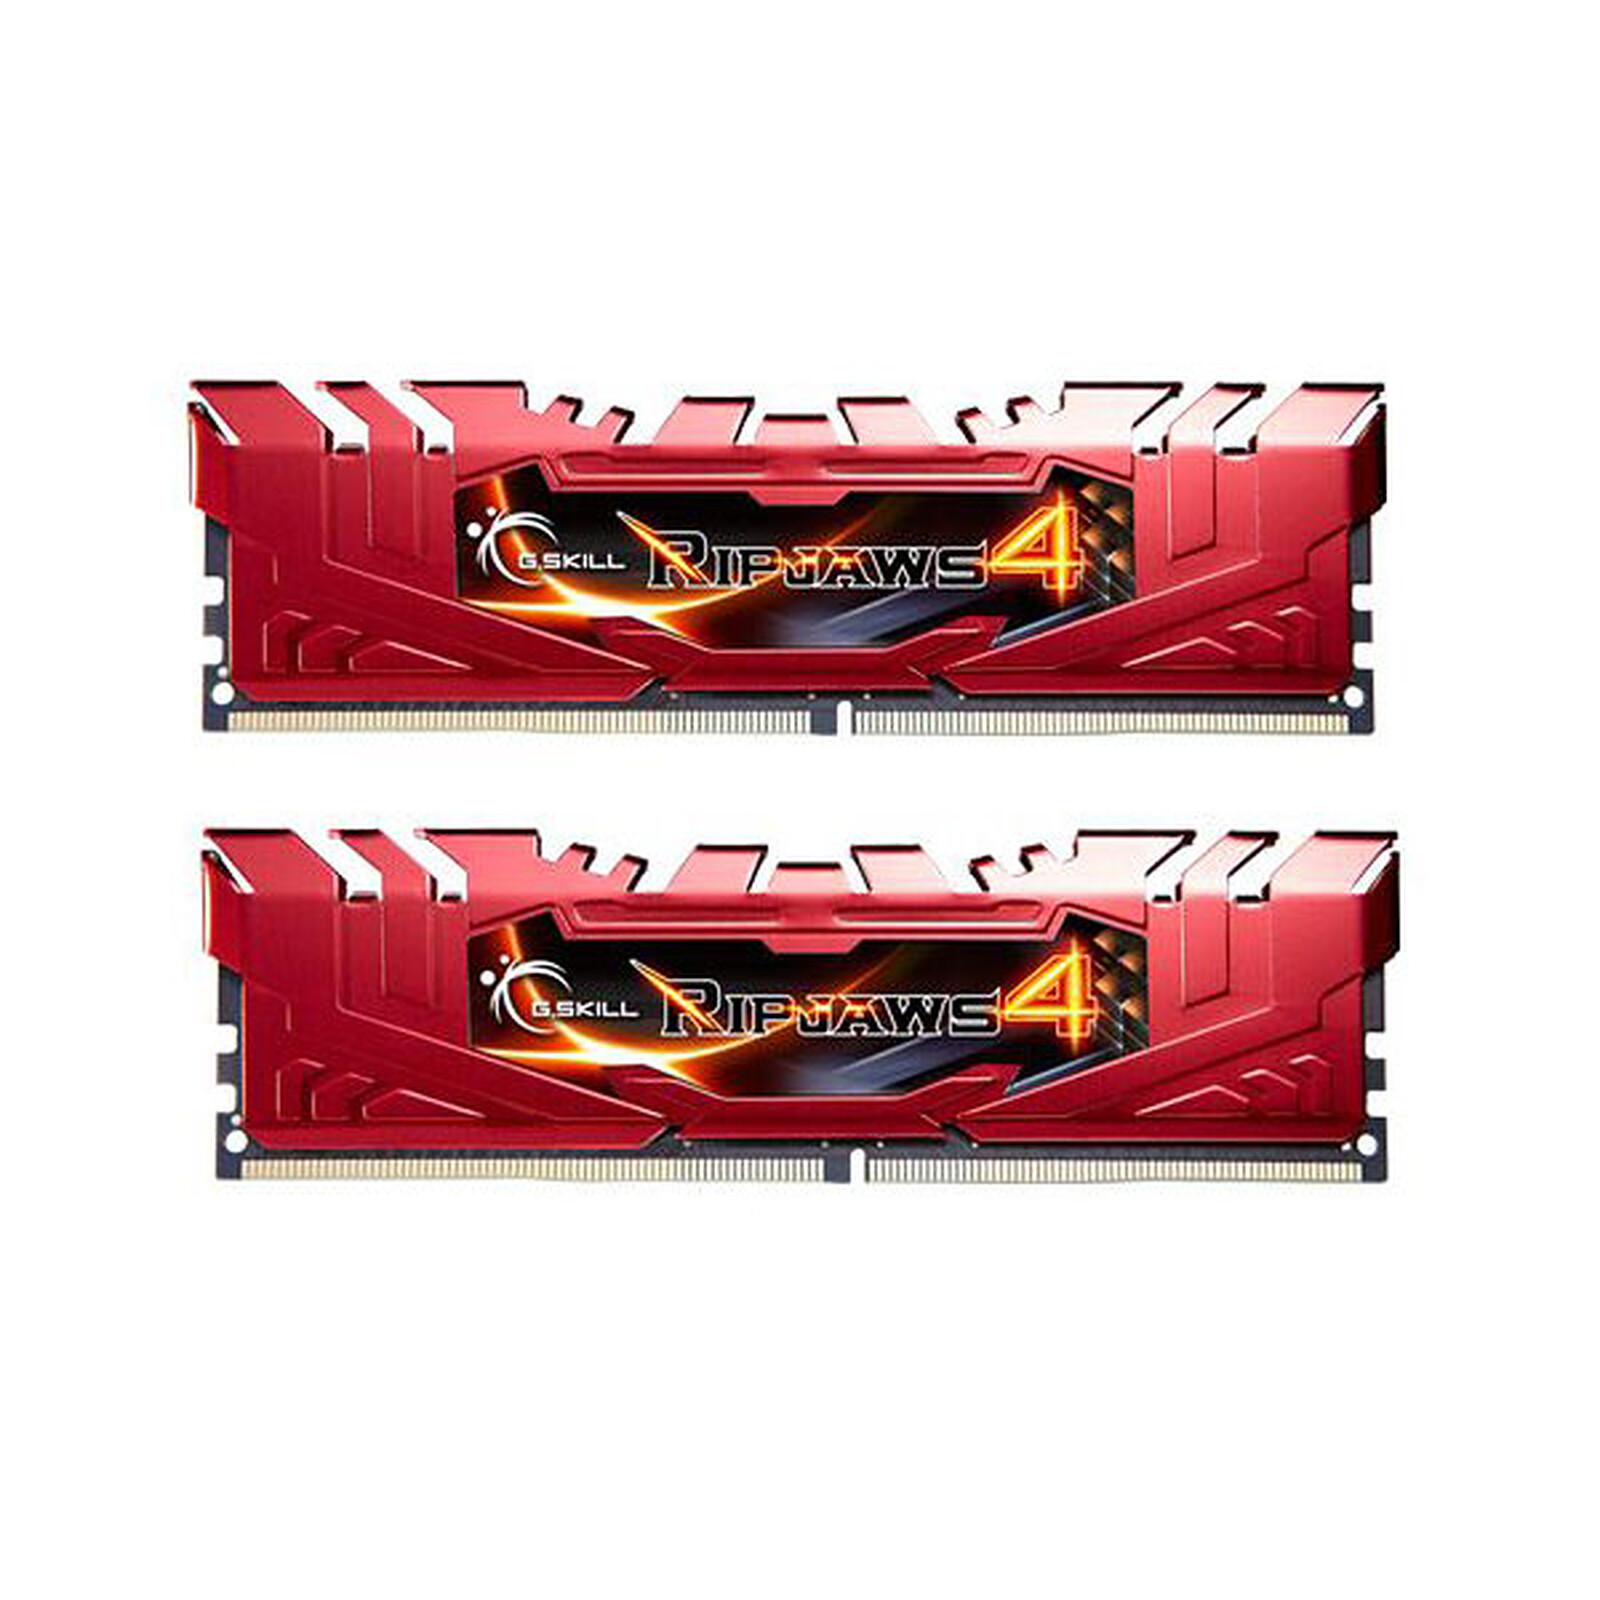 Molestar templo borgoña G.Skill RipJaws 4 Series Red 8GB (2x 4GB) DDR4 2400 MHz CL15 - Memoria PC G. Skill en LDLC